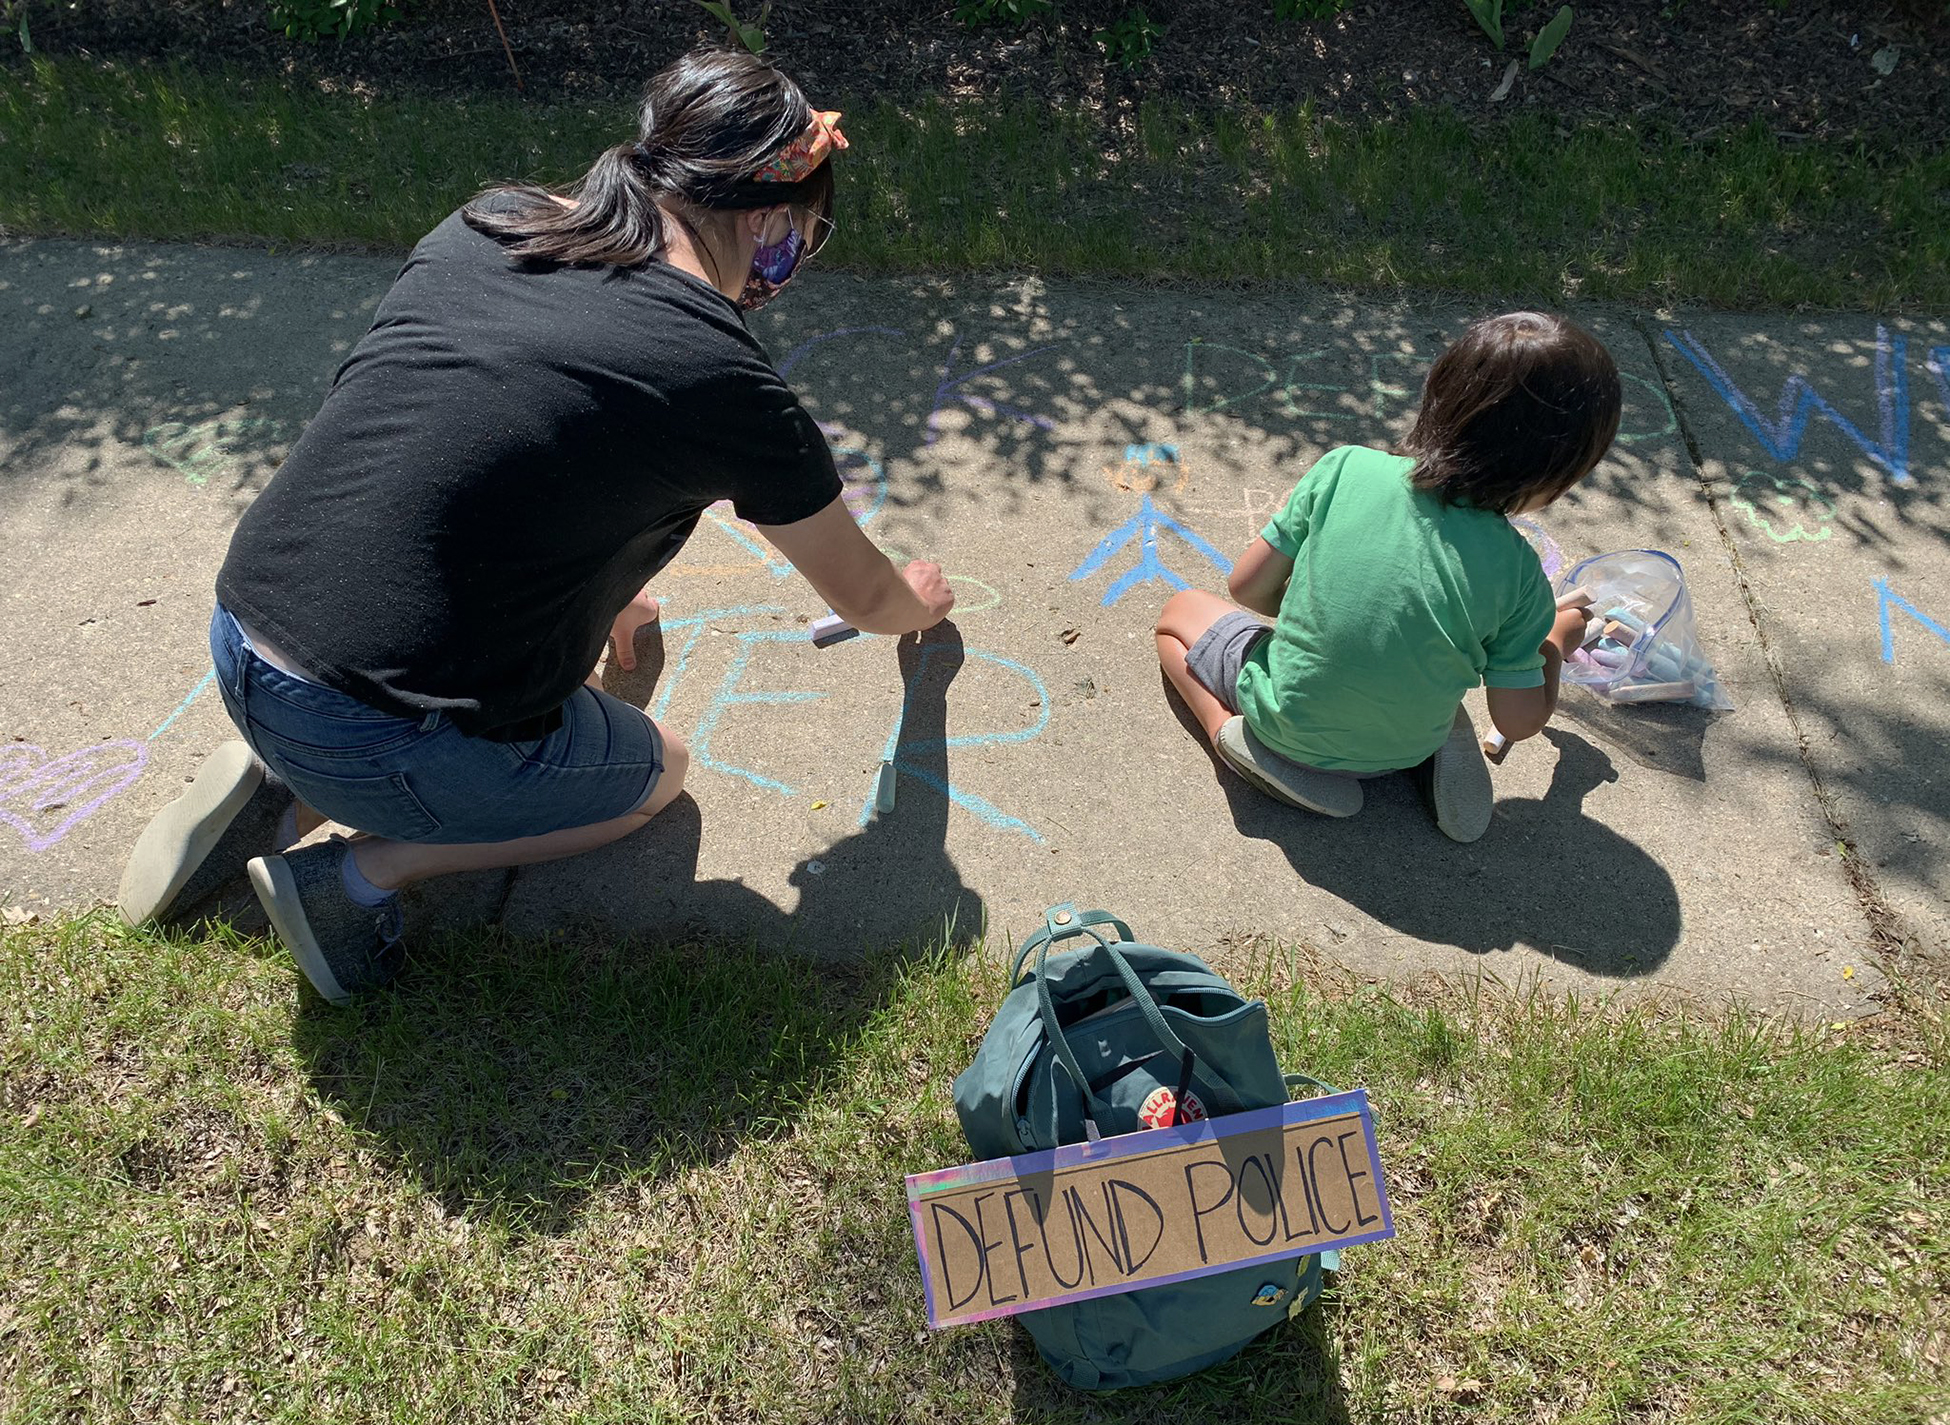 Black Educators Caucus MKE organized a sidewalk chalk event in Milwaukee